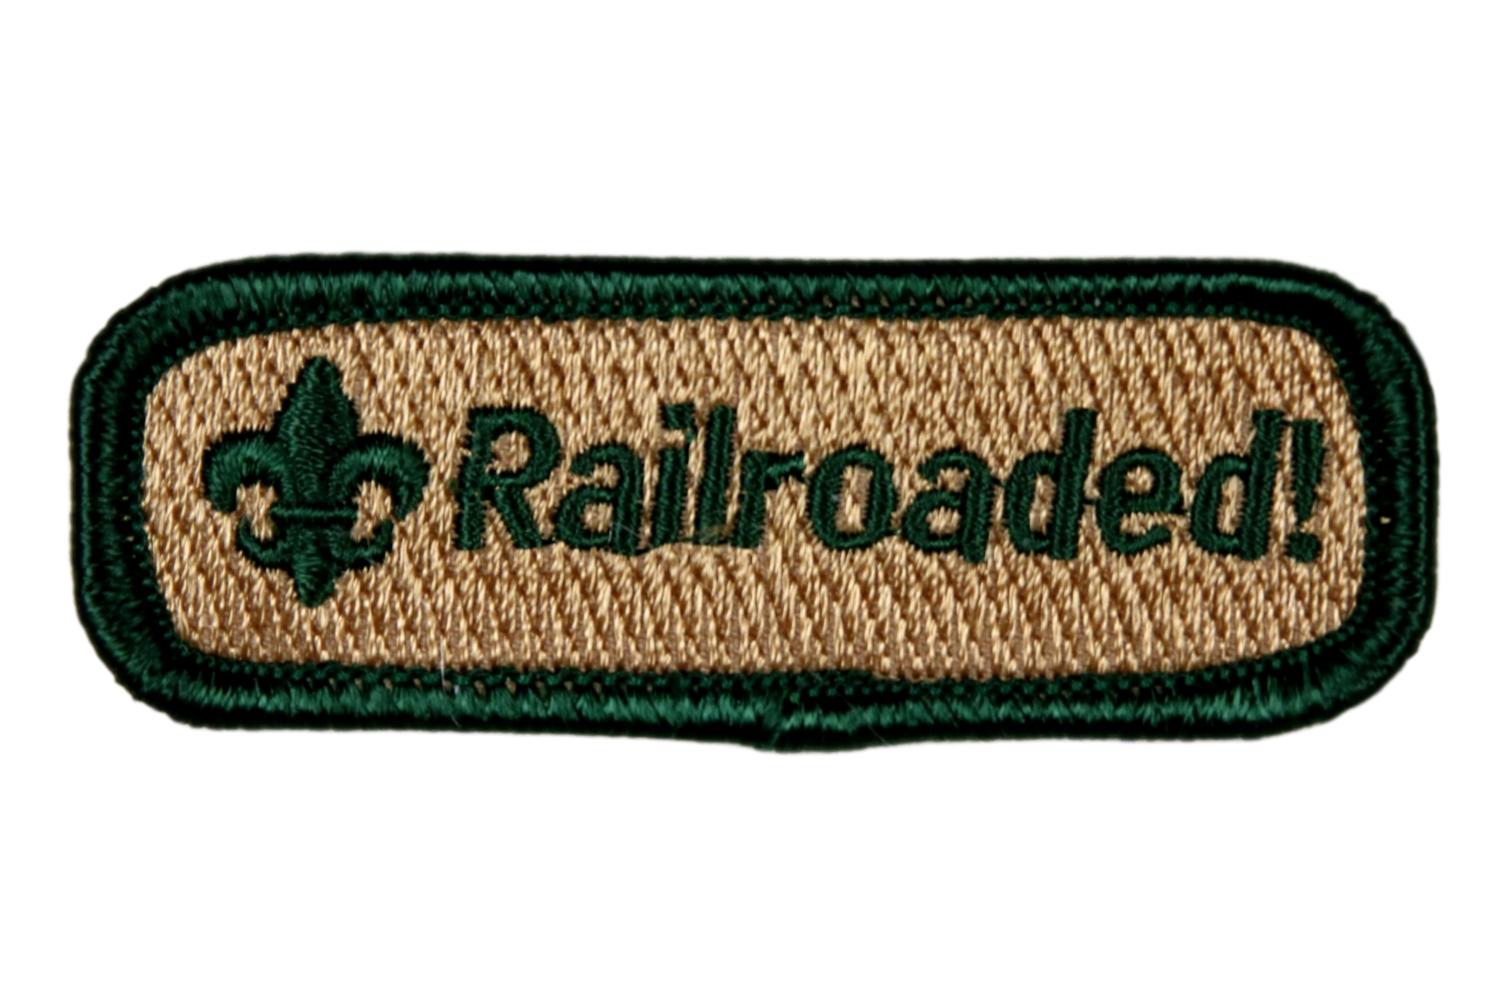 Railroaded Trained Strip